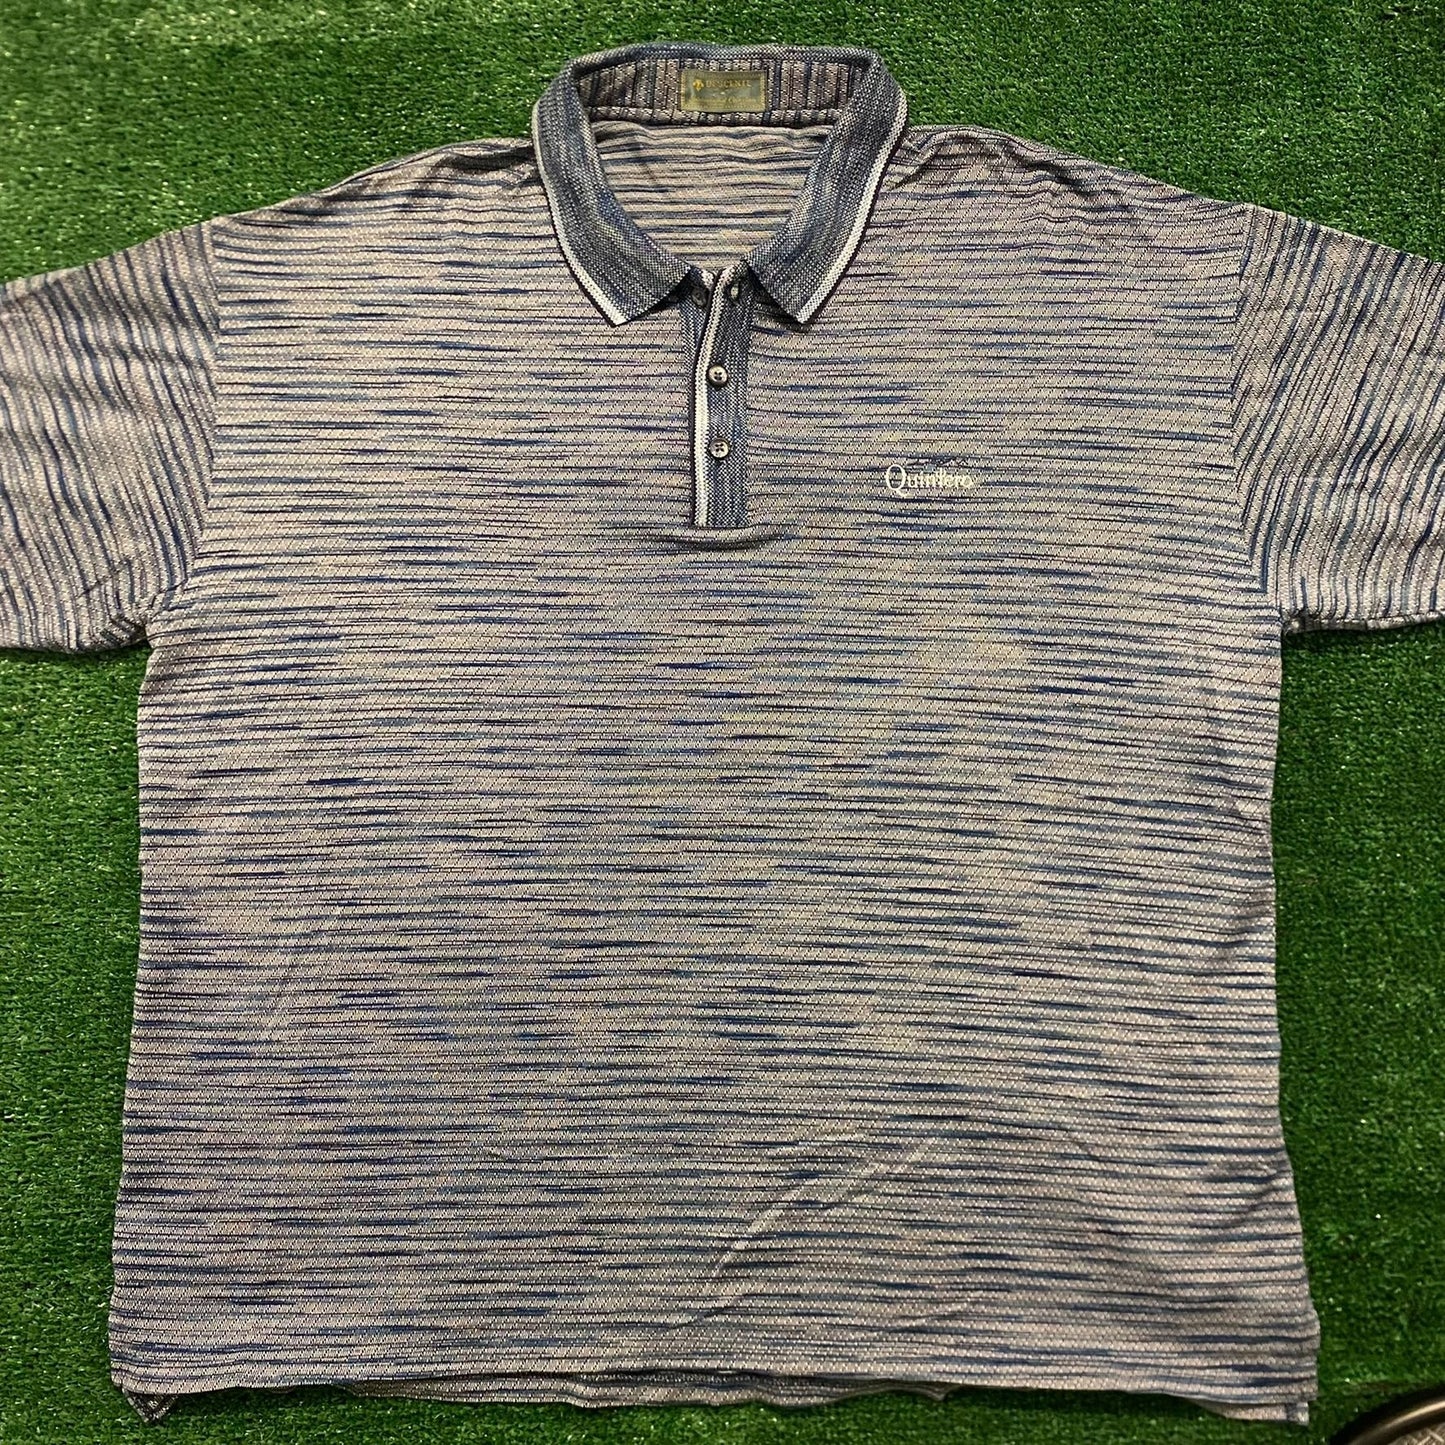 Vintage 90s Golf Tennis Polo Shirt